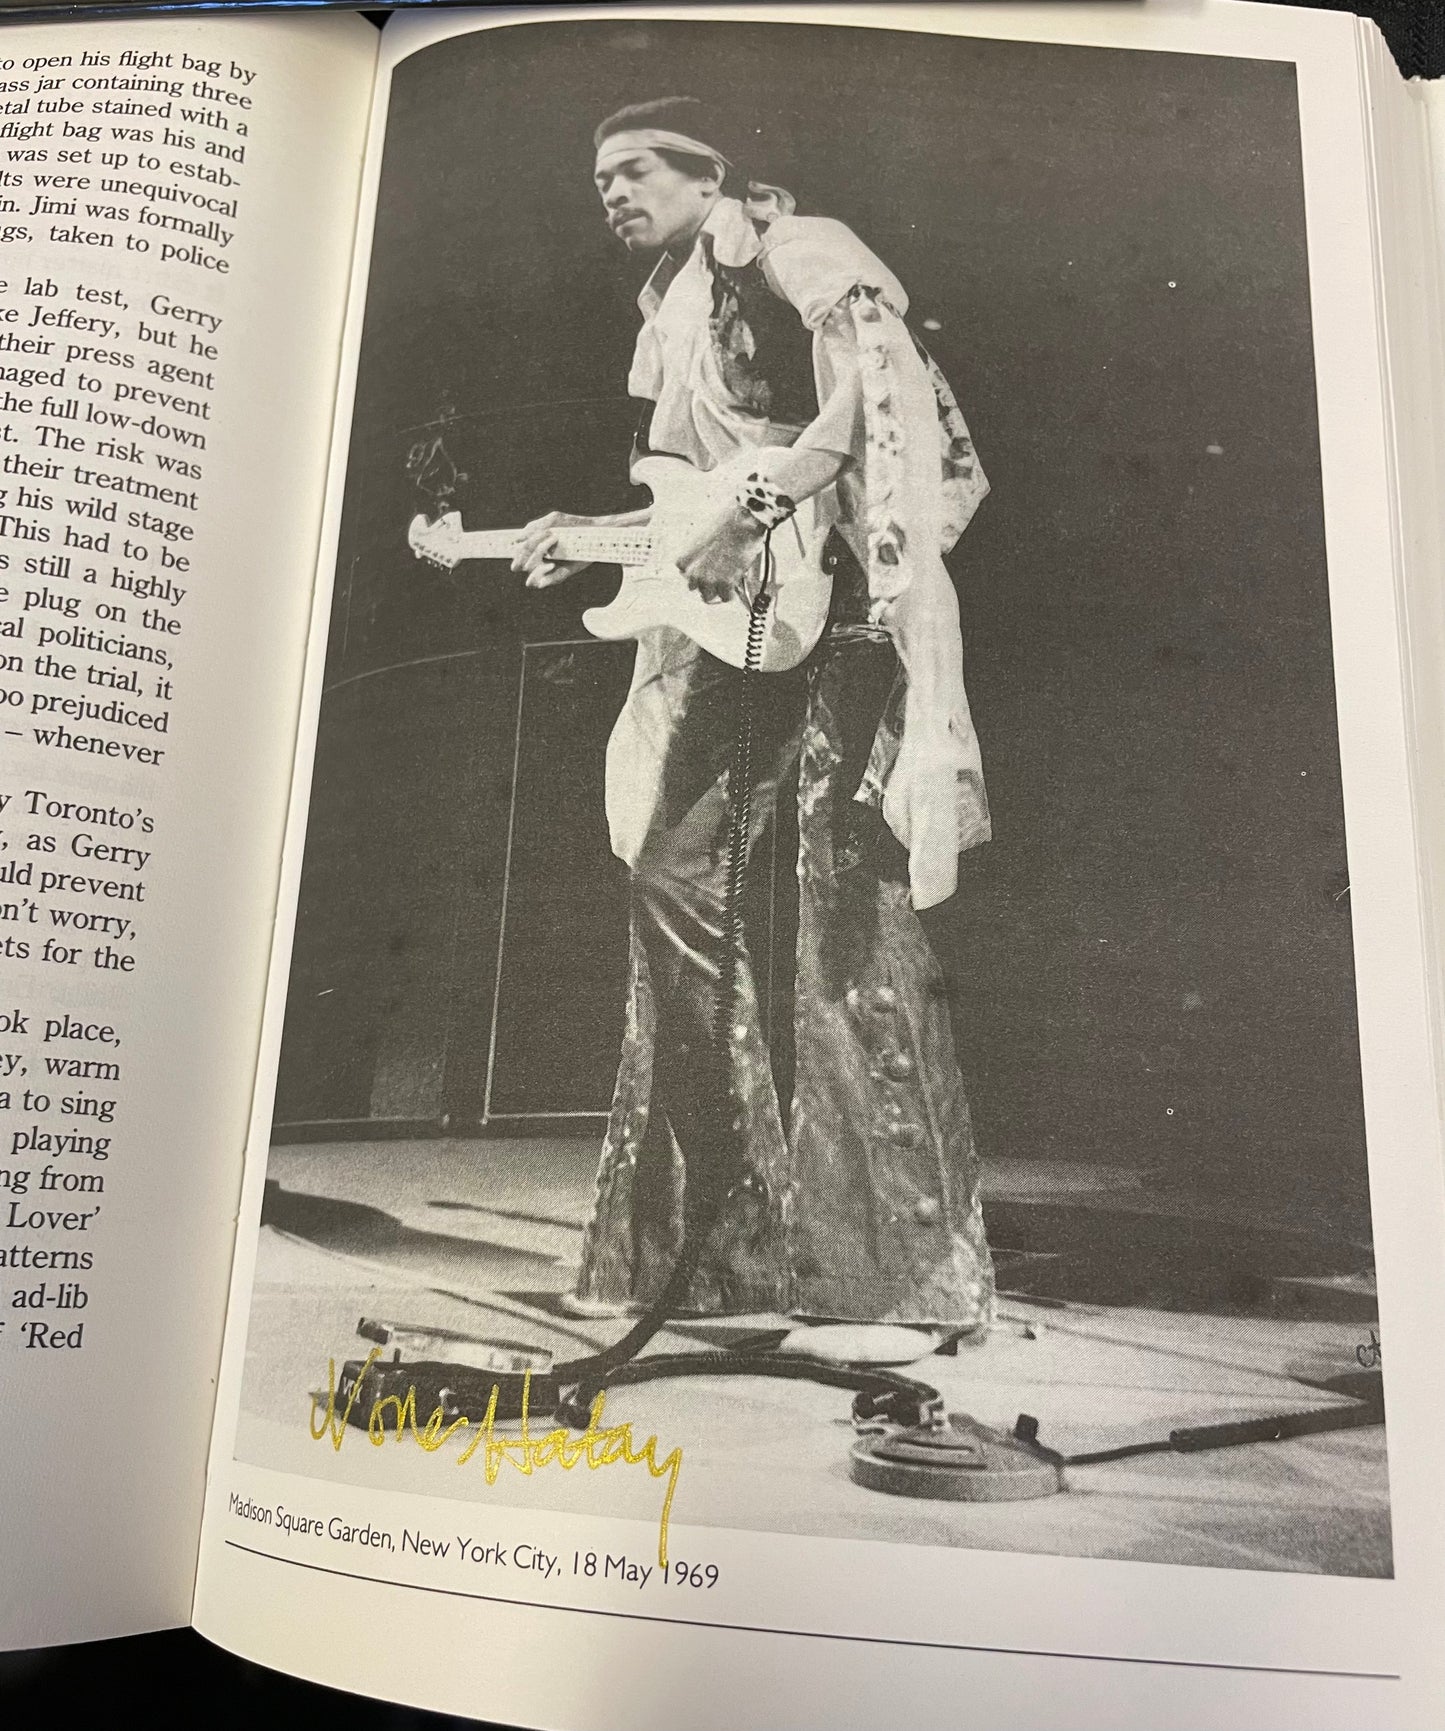 Jimi Hendrix -Electric Gypsy - Book